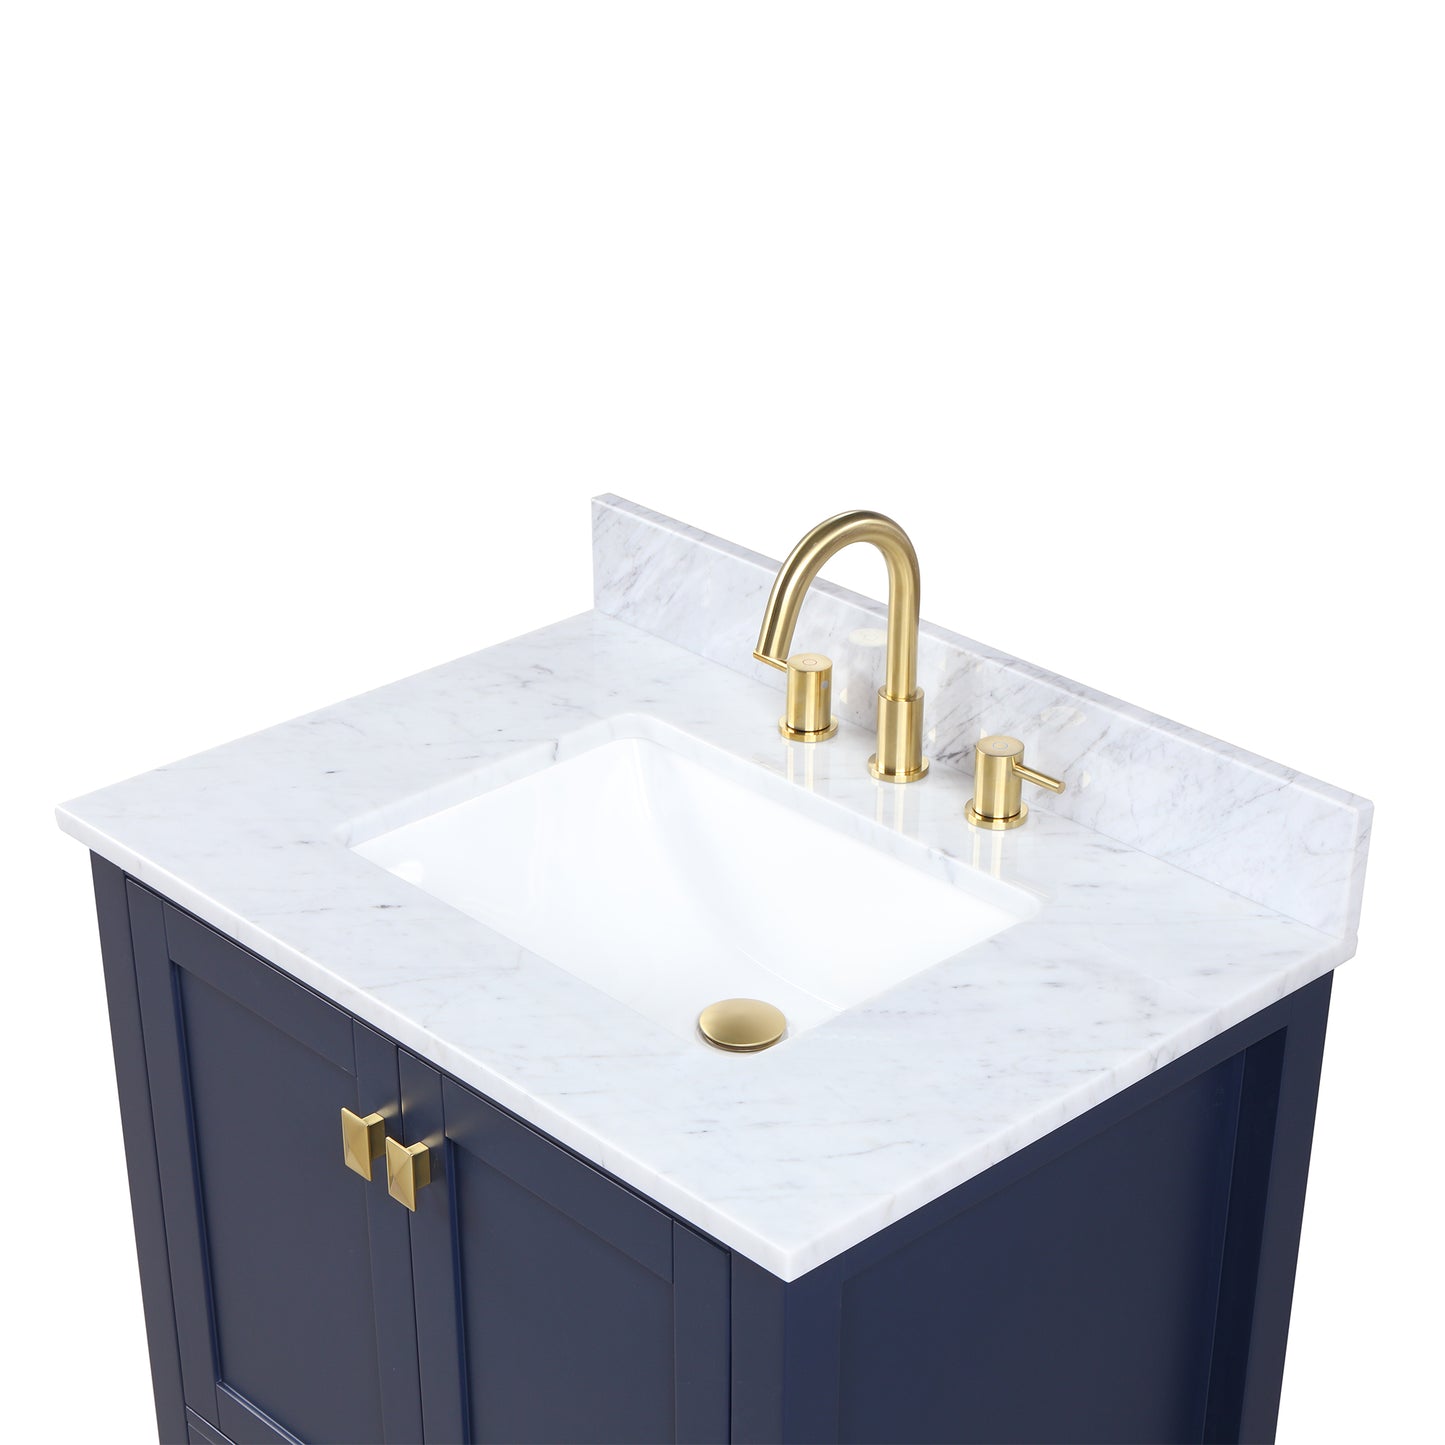 Geneva 30" Freestanding Bathroom Vanity With Carrara Marble Countertop & Undermount Ceramic Sink - Navy Blue